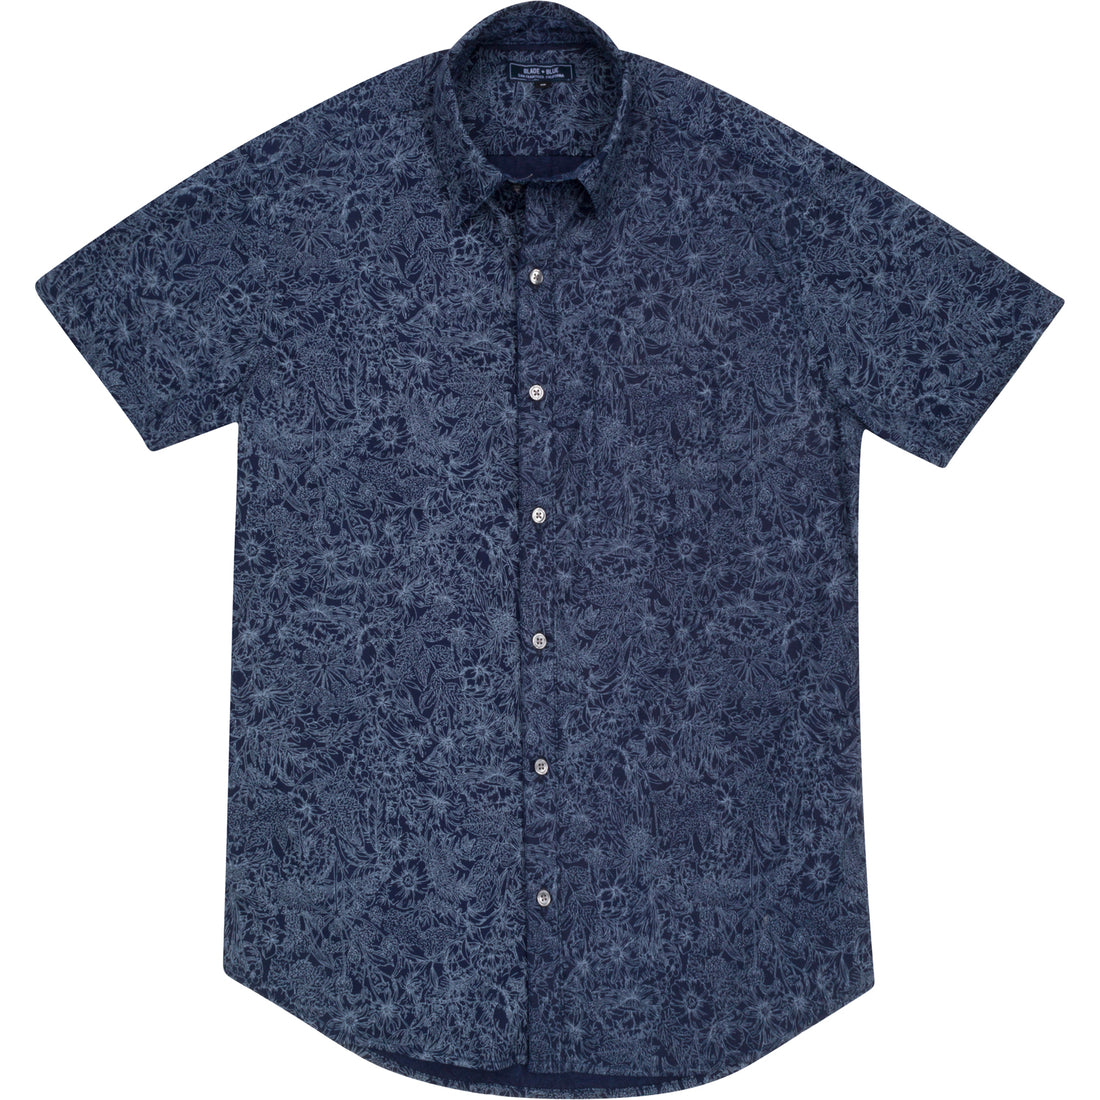 KORY Short Sleeve Shirt in Indigo Blue Drawn Floral Print